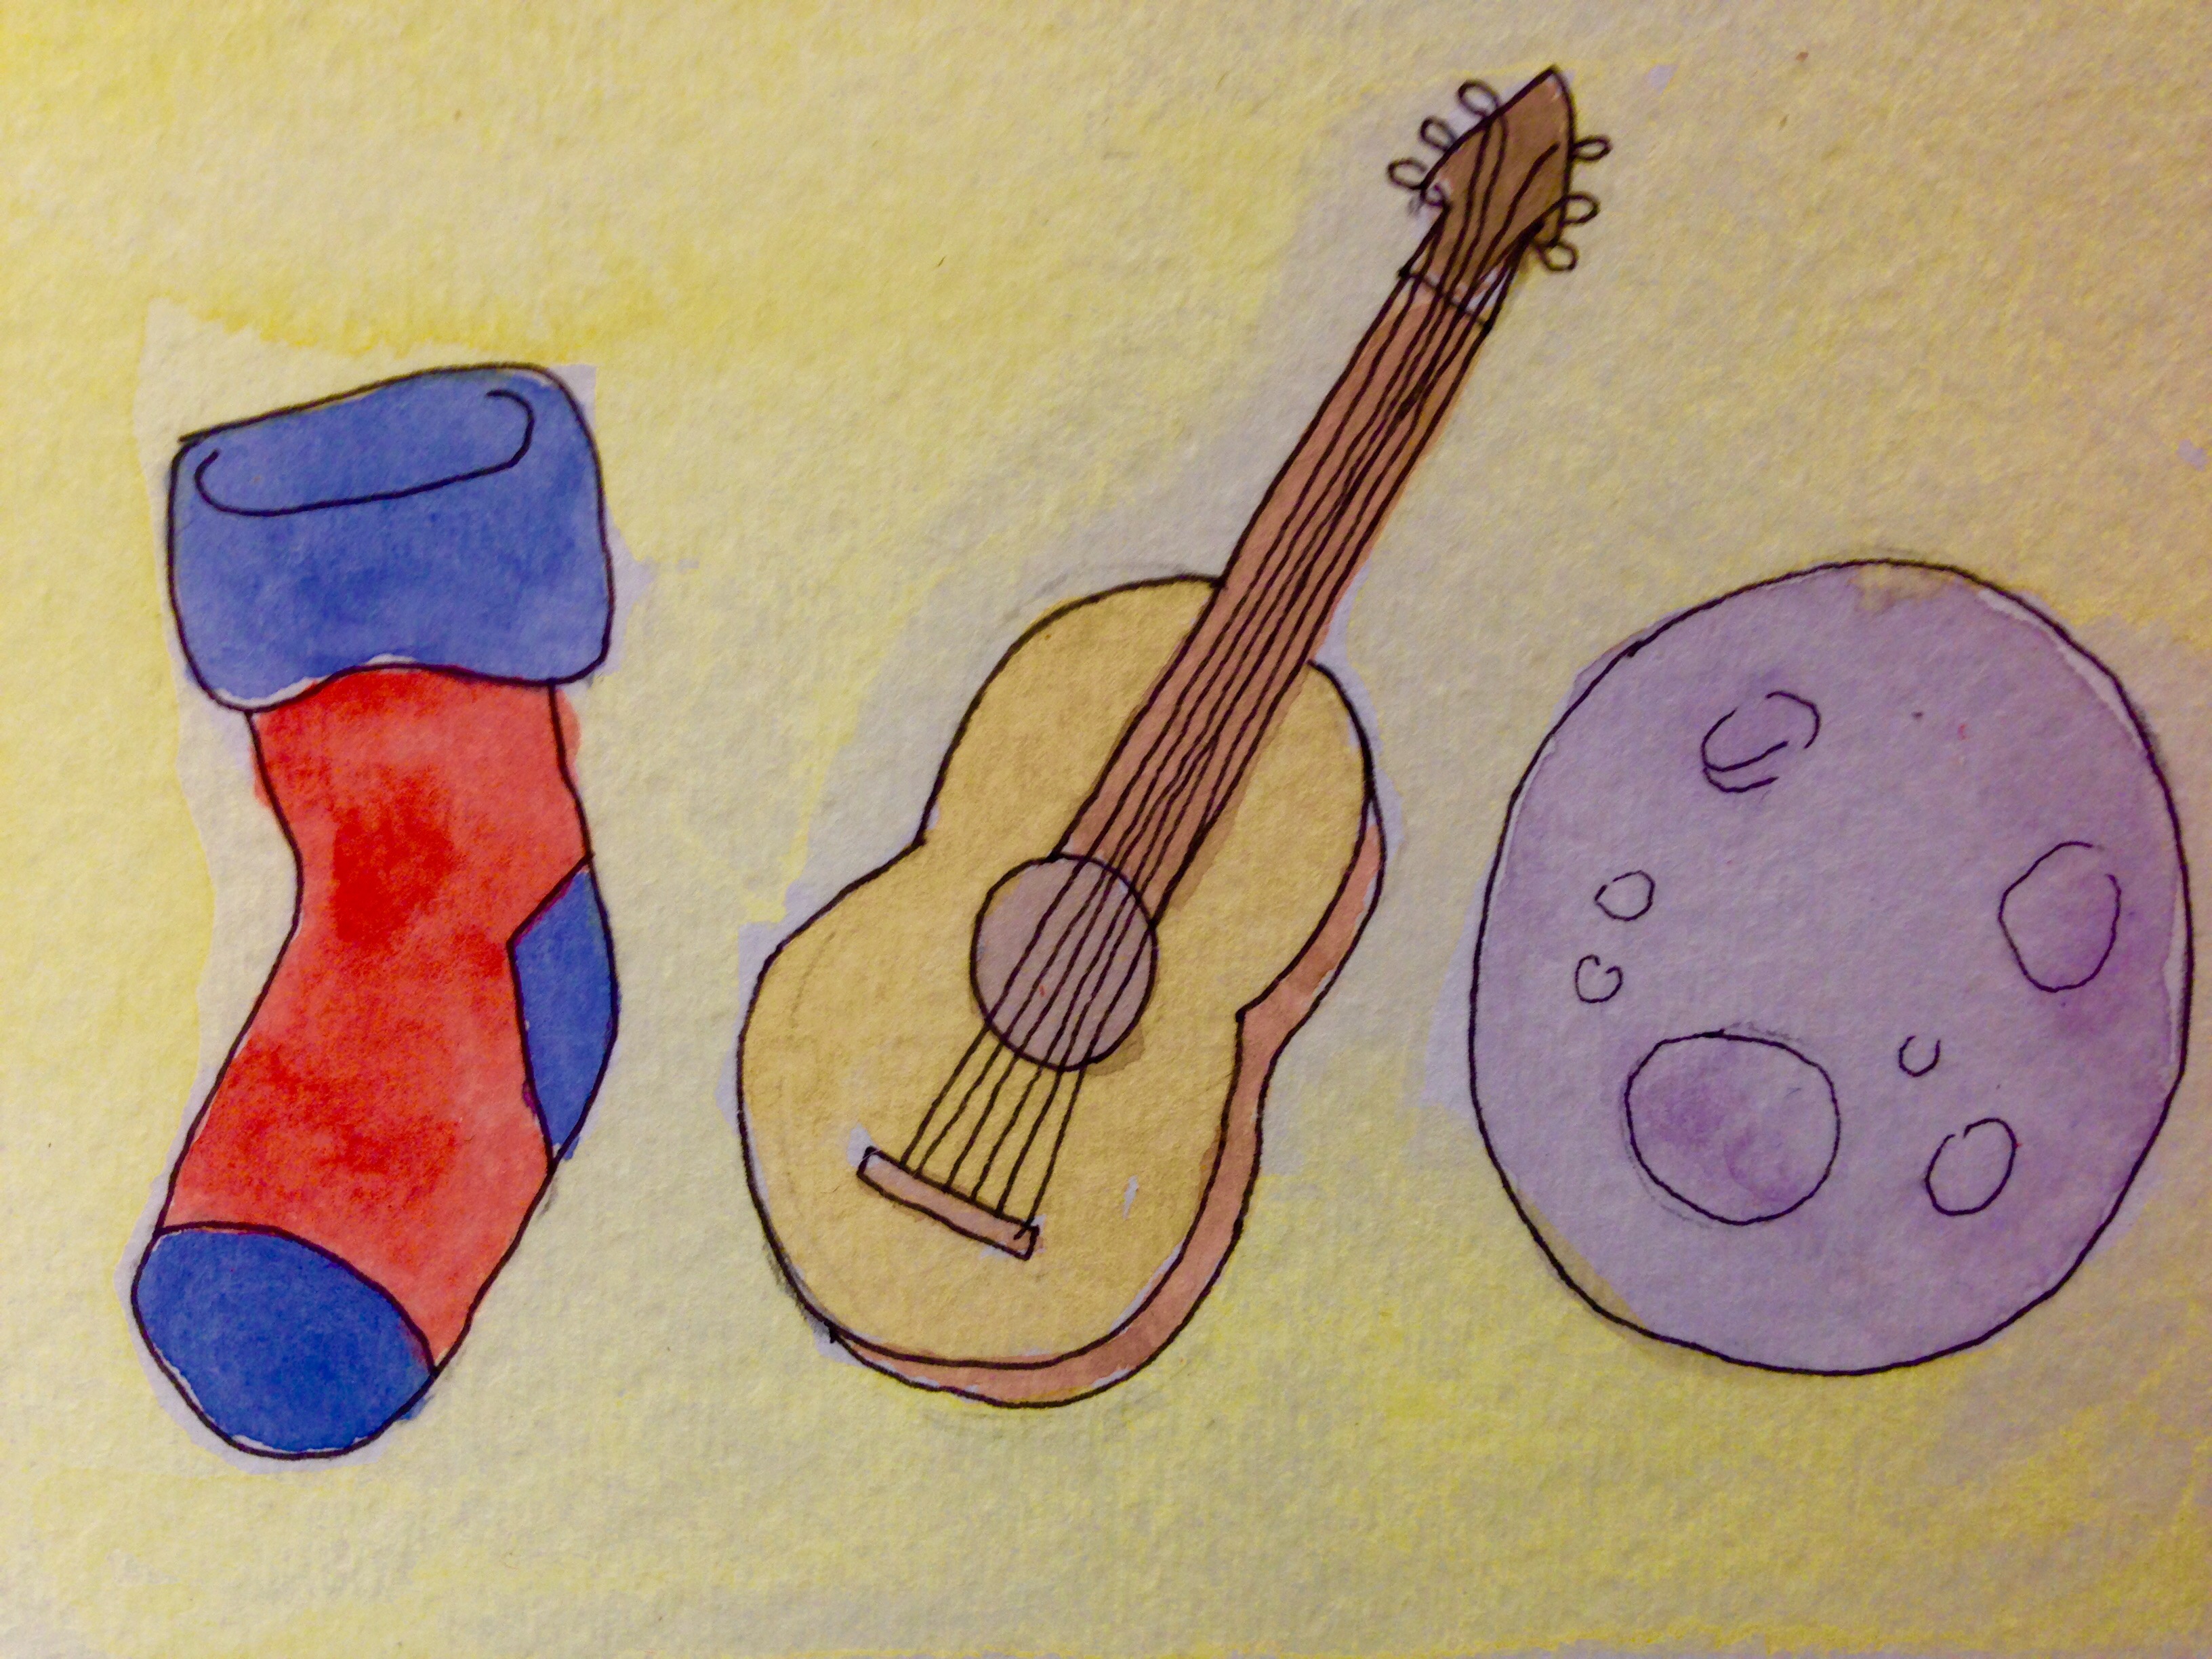 Socks, Guitar, Moon